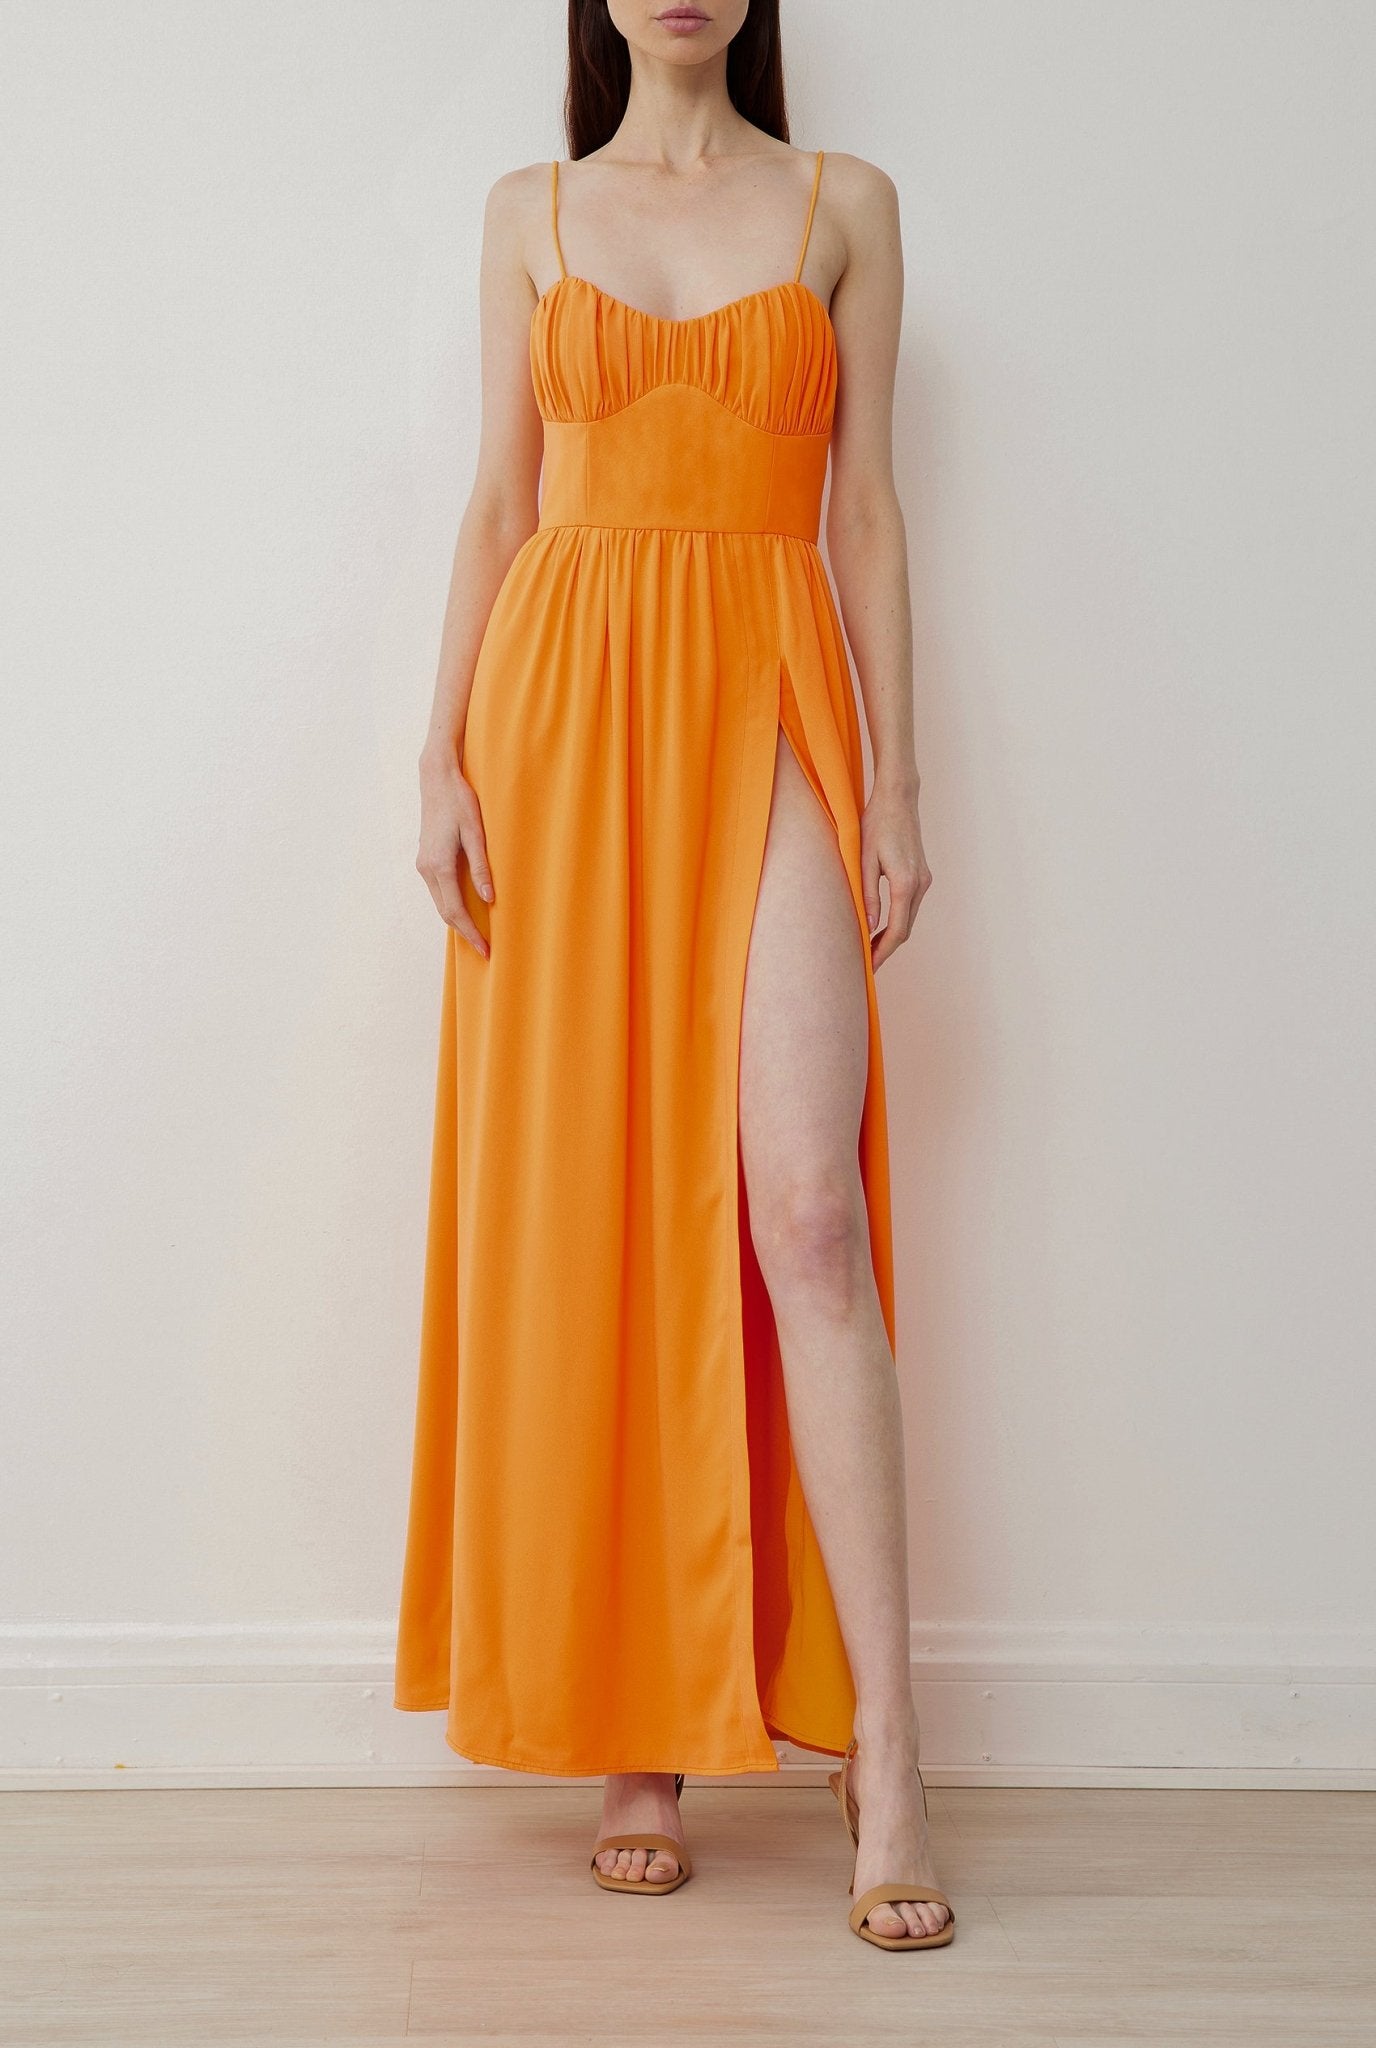 Sia Dress in Tangerine - BOSKEMPER